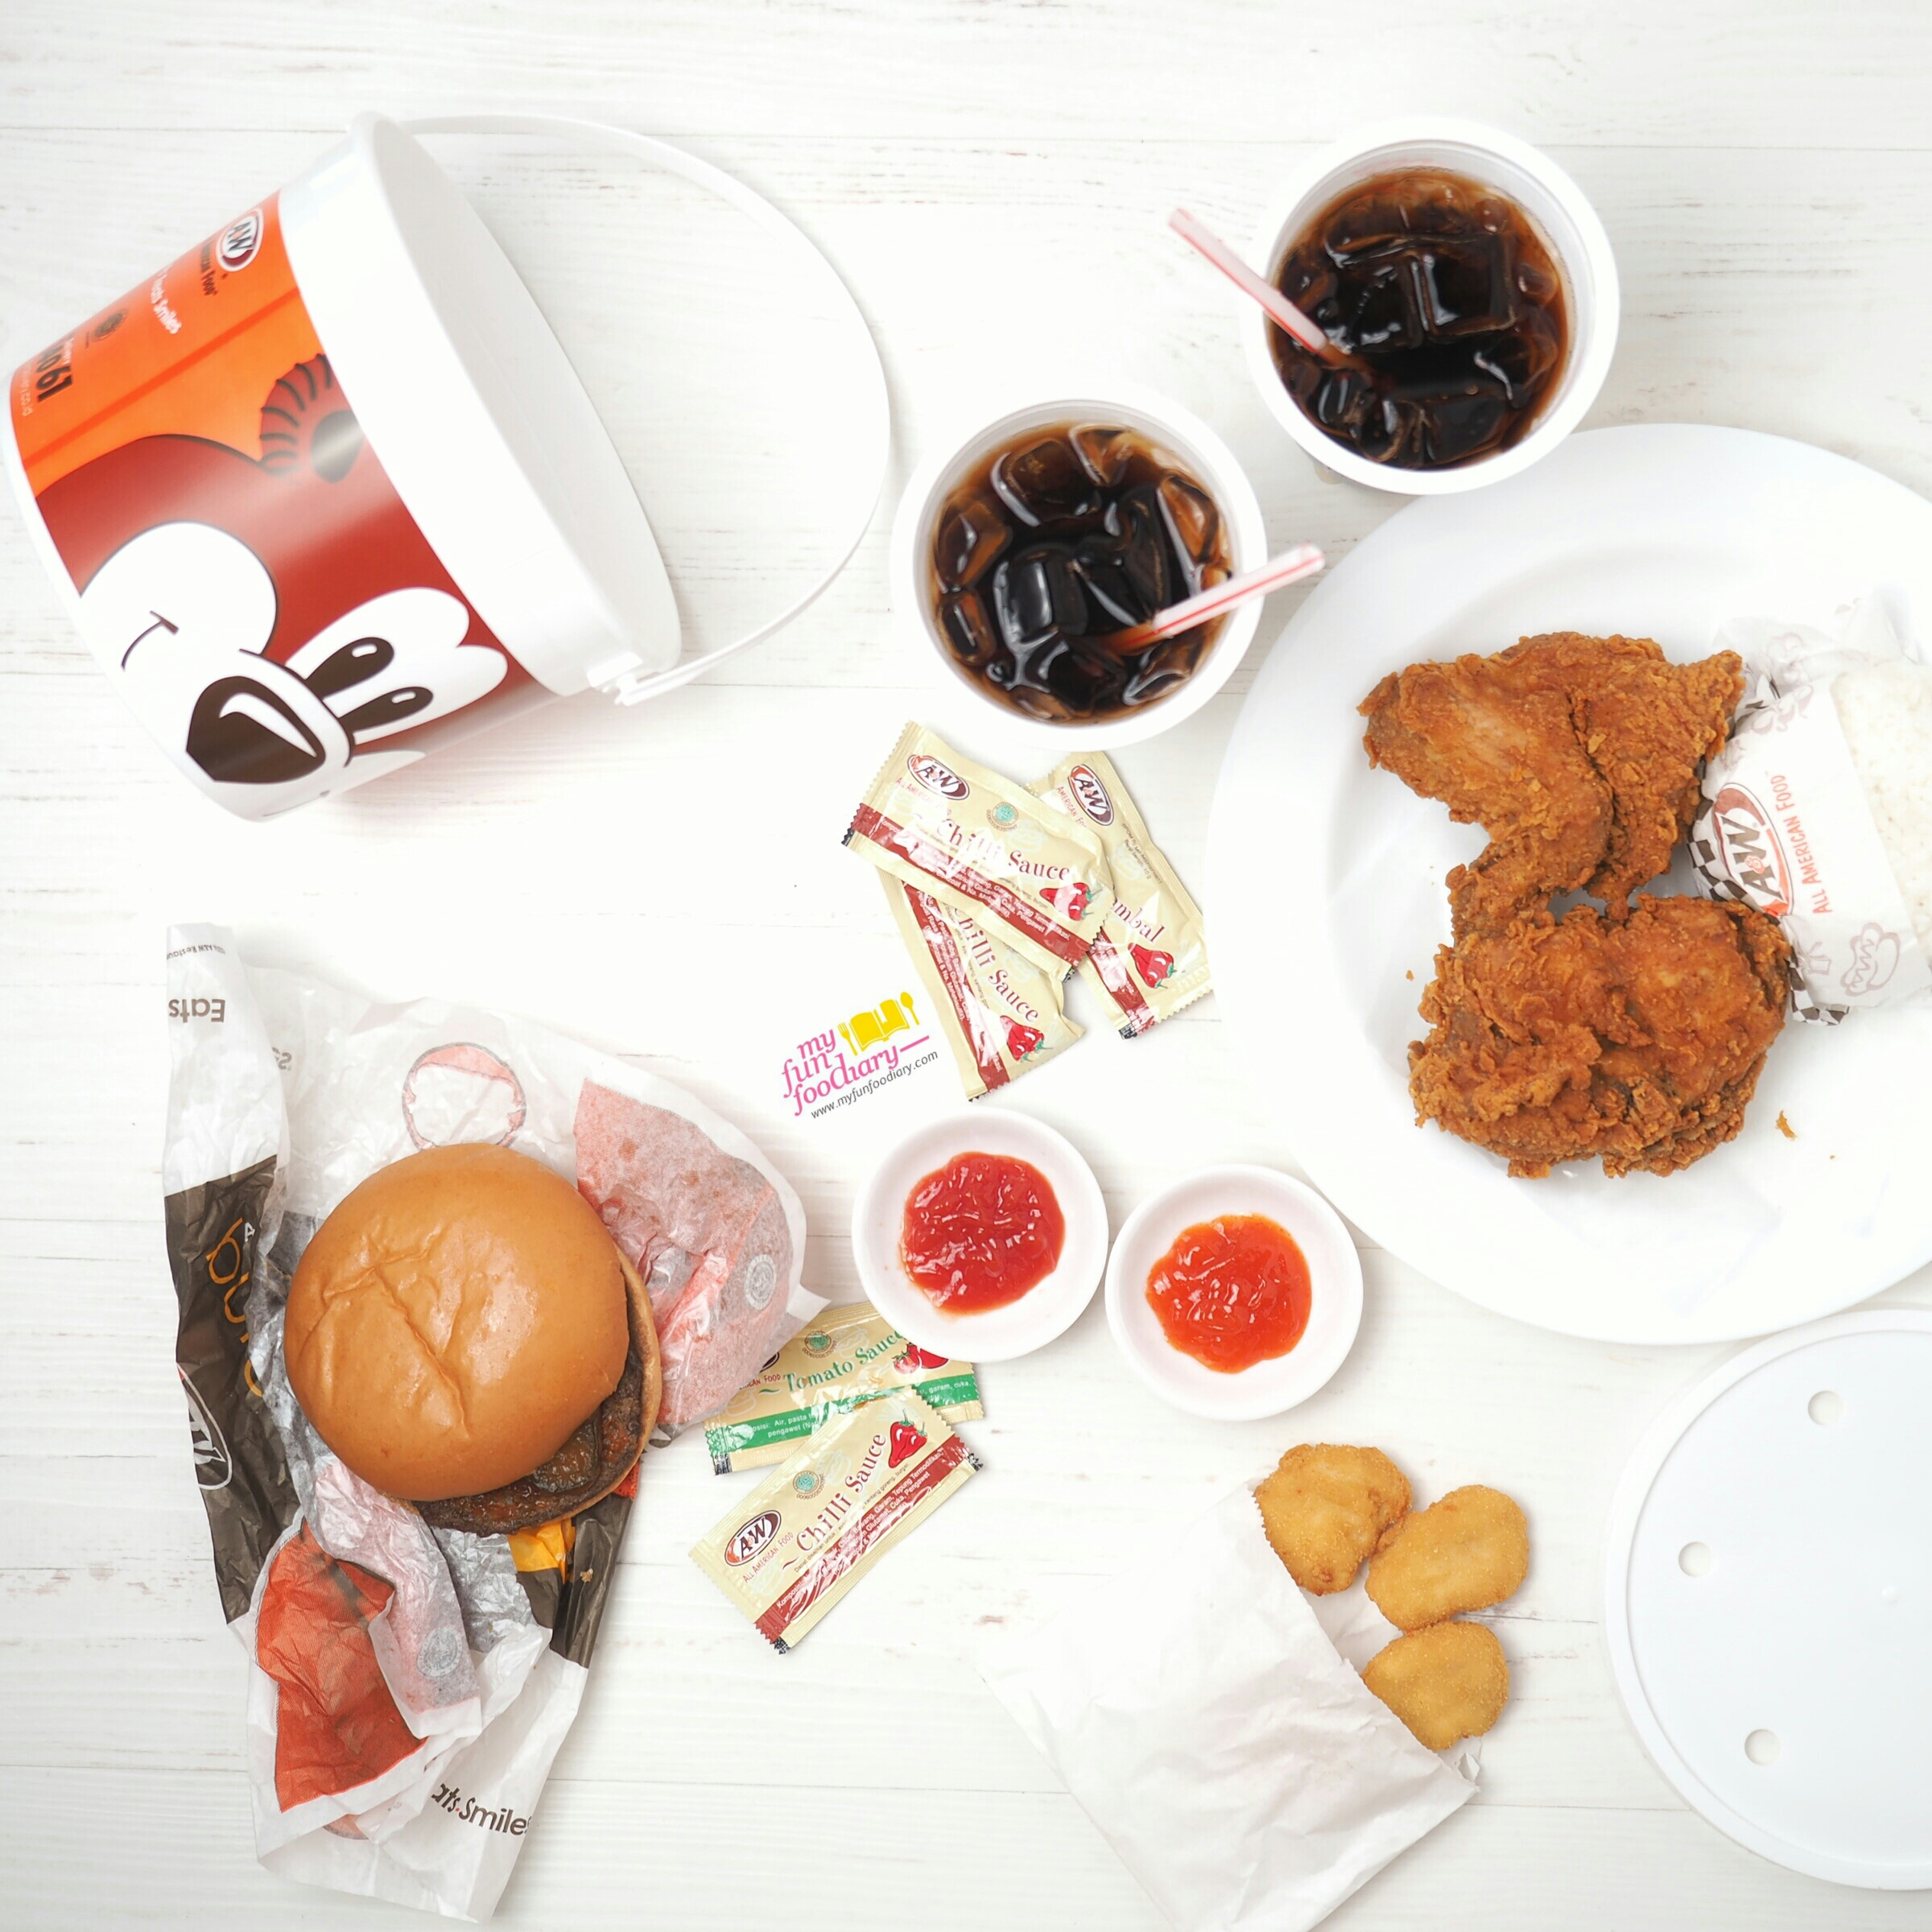 Picnic Barrel A&W Chicken via Foodpanda by Myfunfoodiary